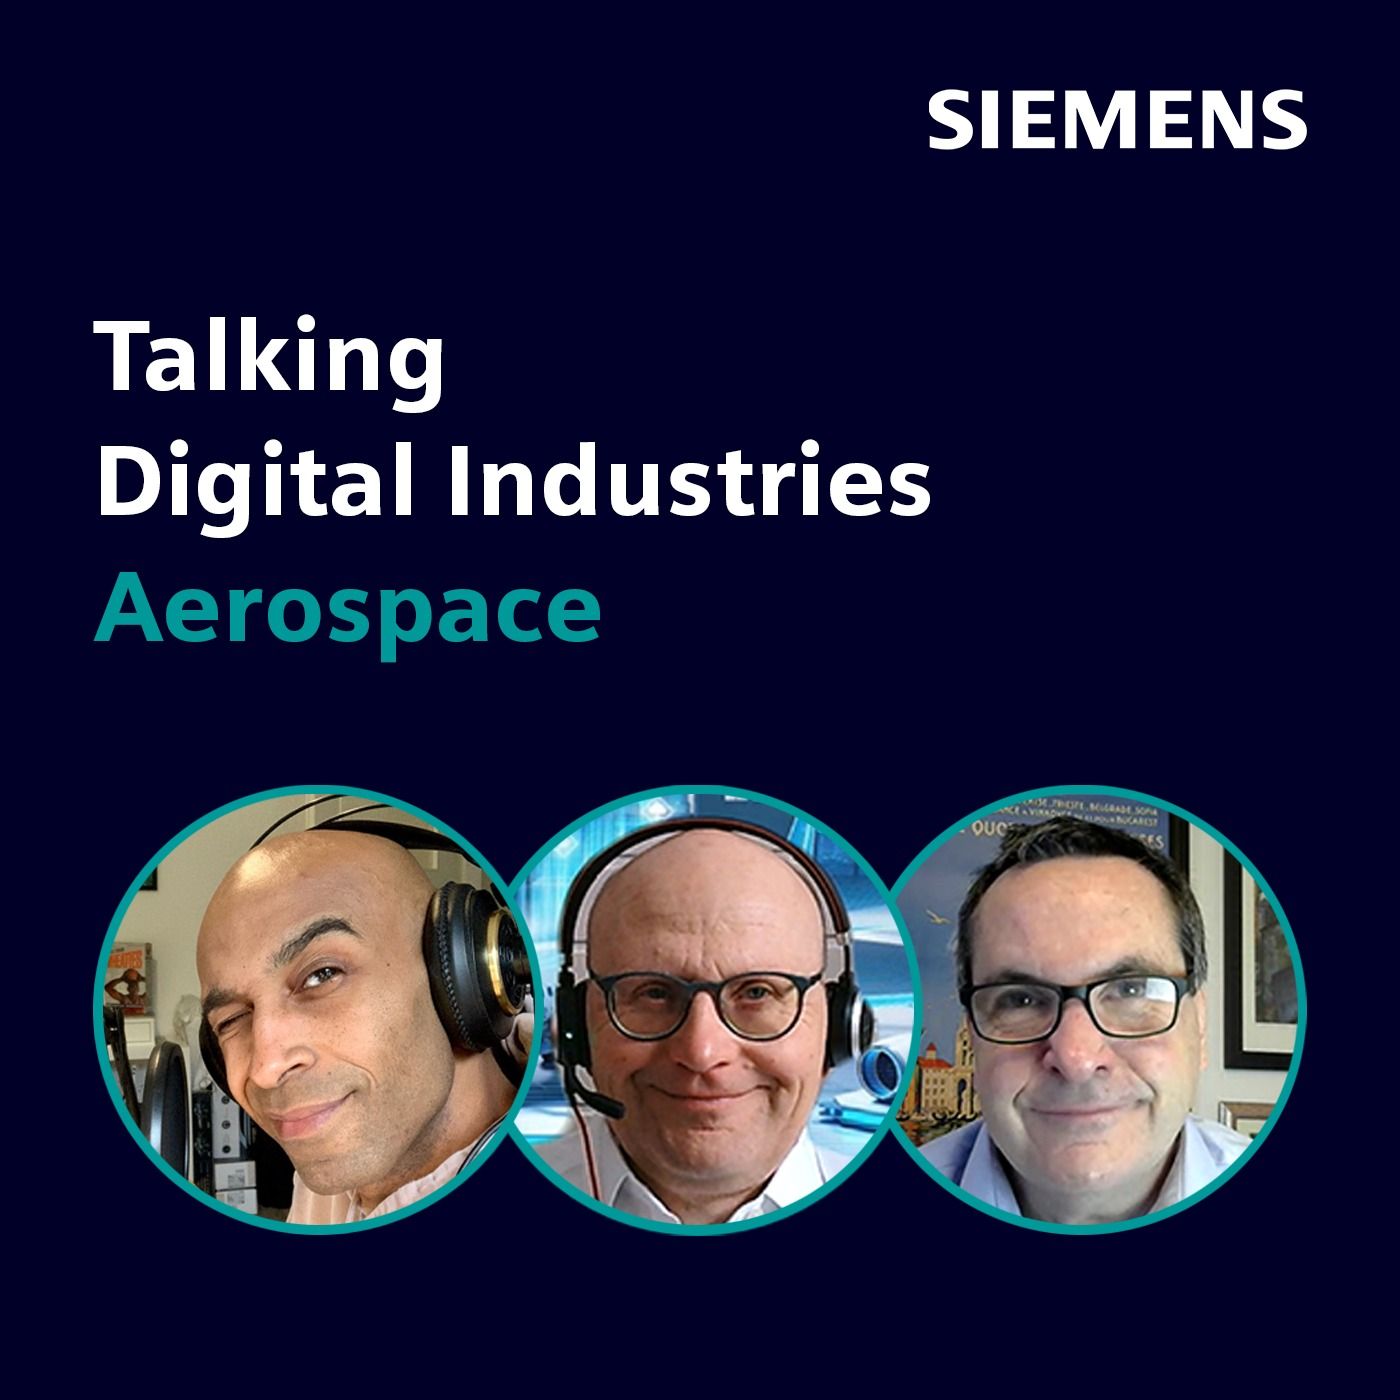 Aerospace industry – Flying high with digitalization